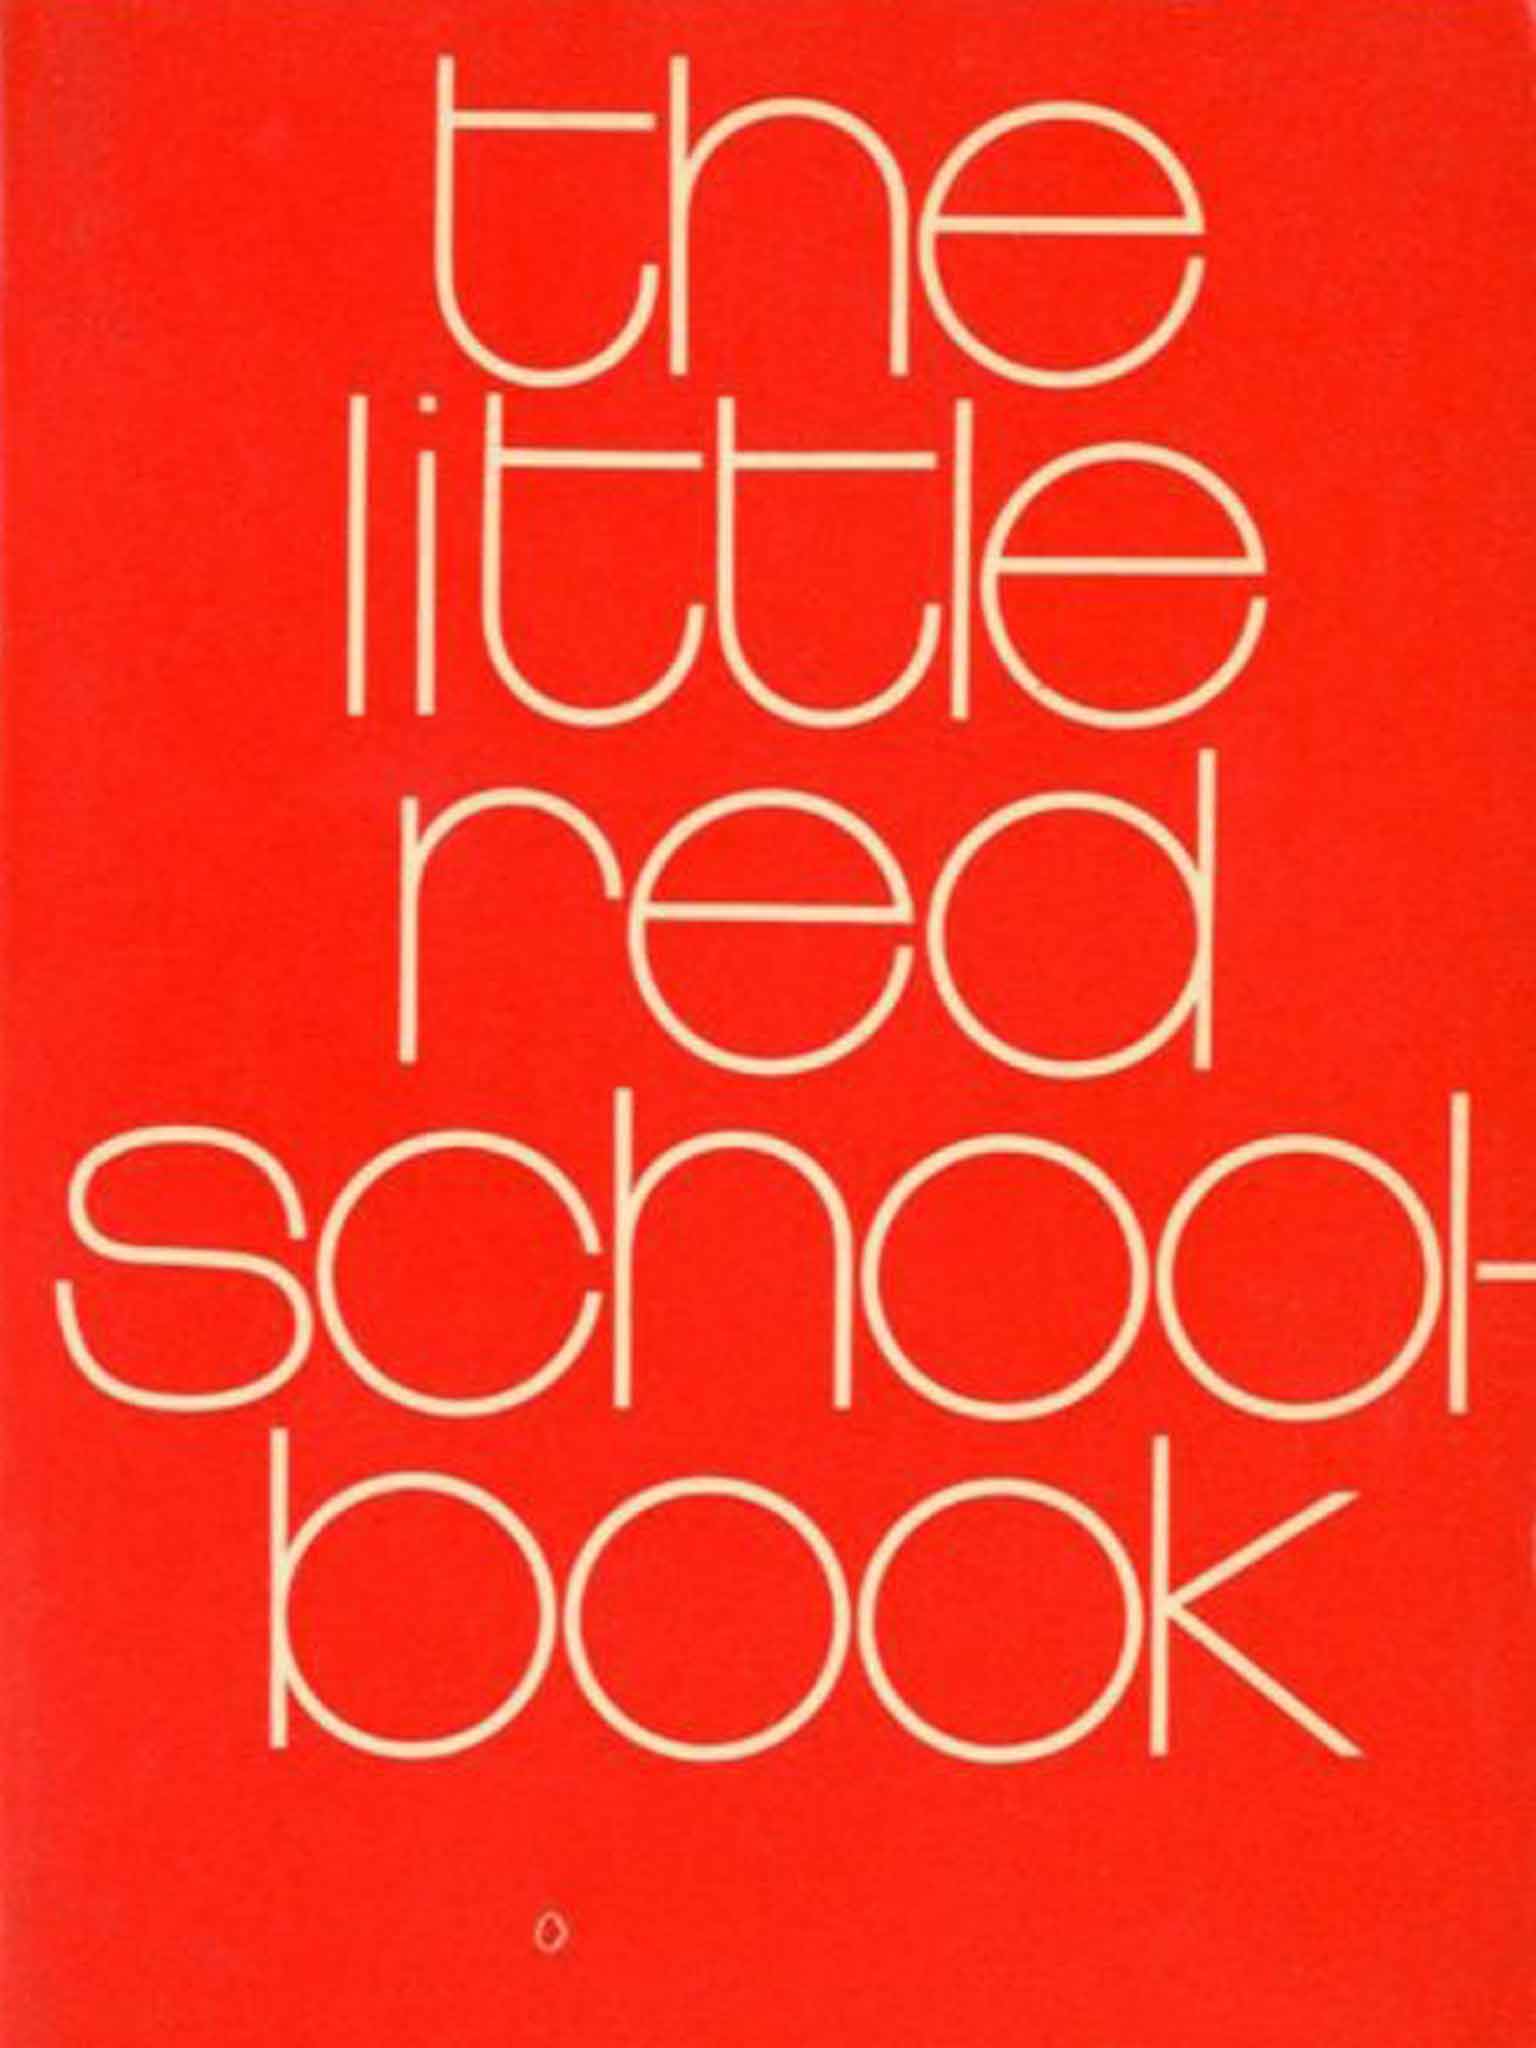 The Little Red School Book by Søren Hansen and Jesper Jensen (£5, Pinter & Martin) is out on 15 July